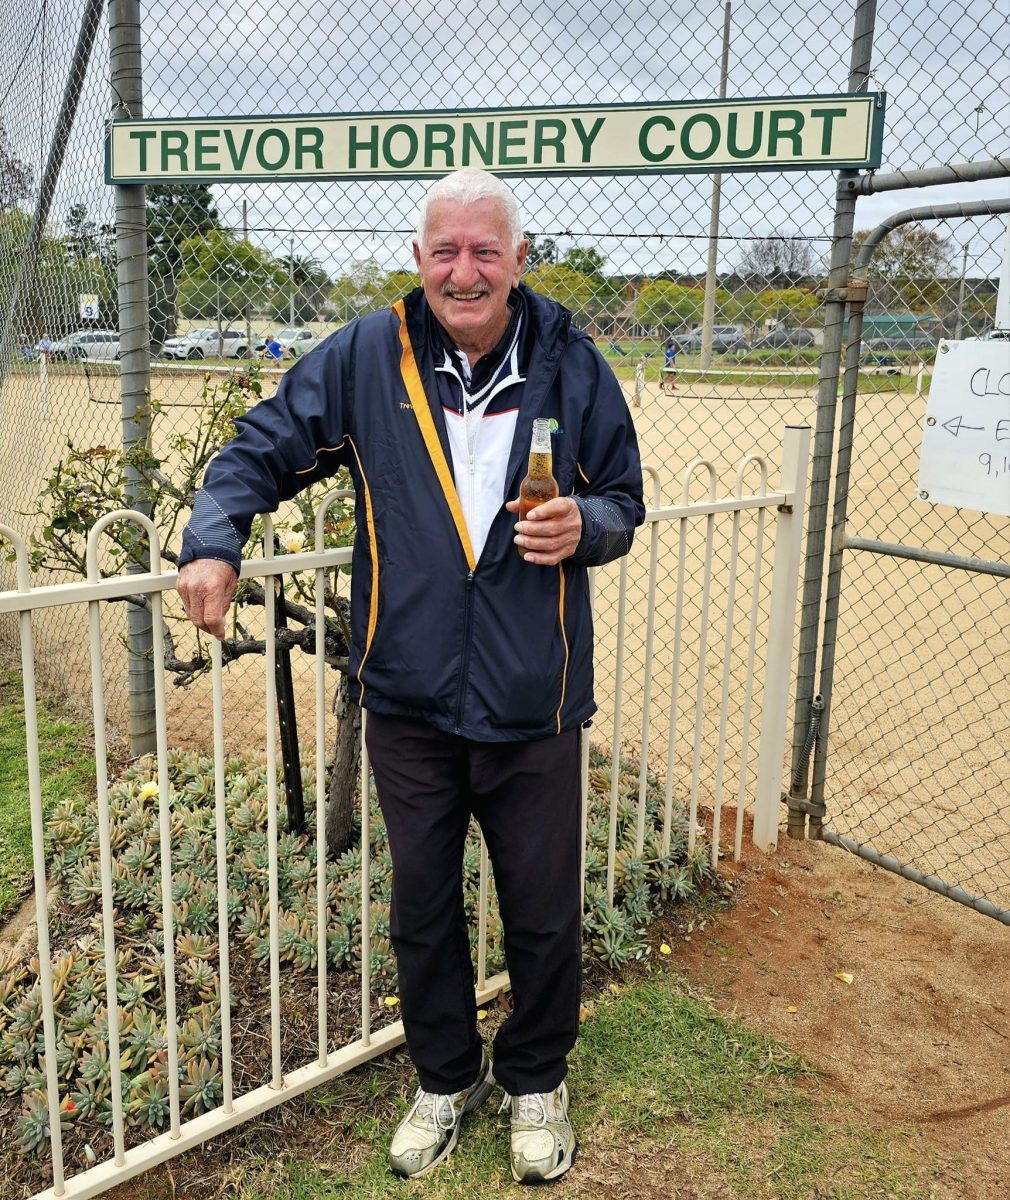 Trevor Horney with a beer